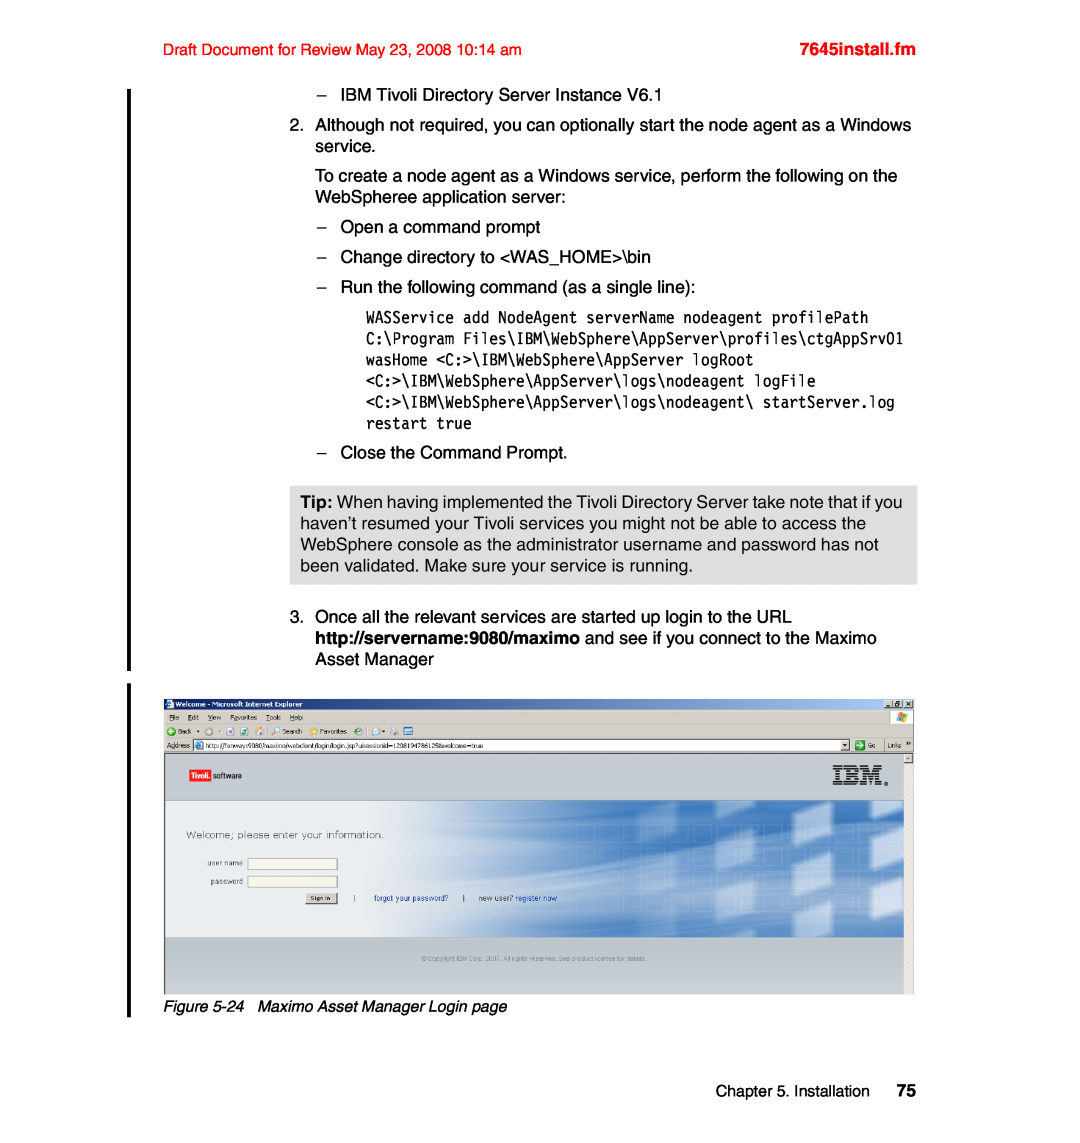 IBM SG24-7645-00 manual 7645install.fm, IBM Tivoli Directory Server Instance 